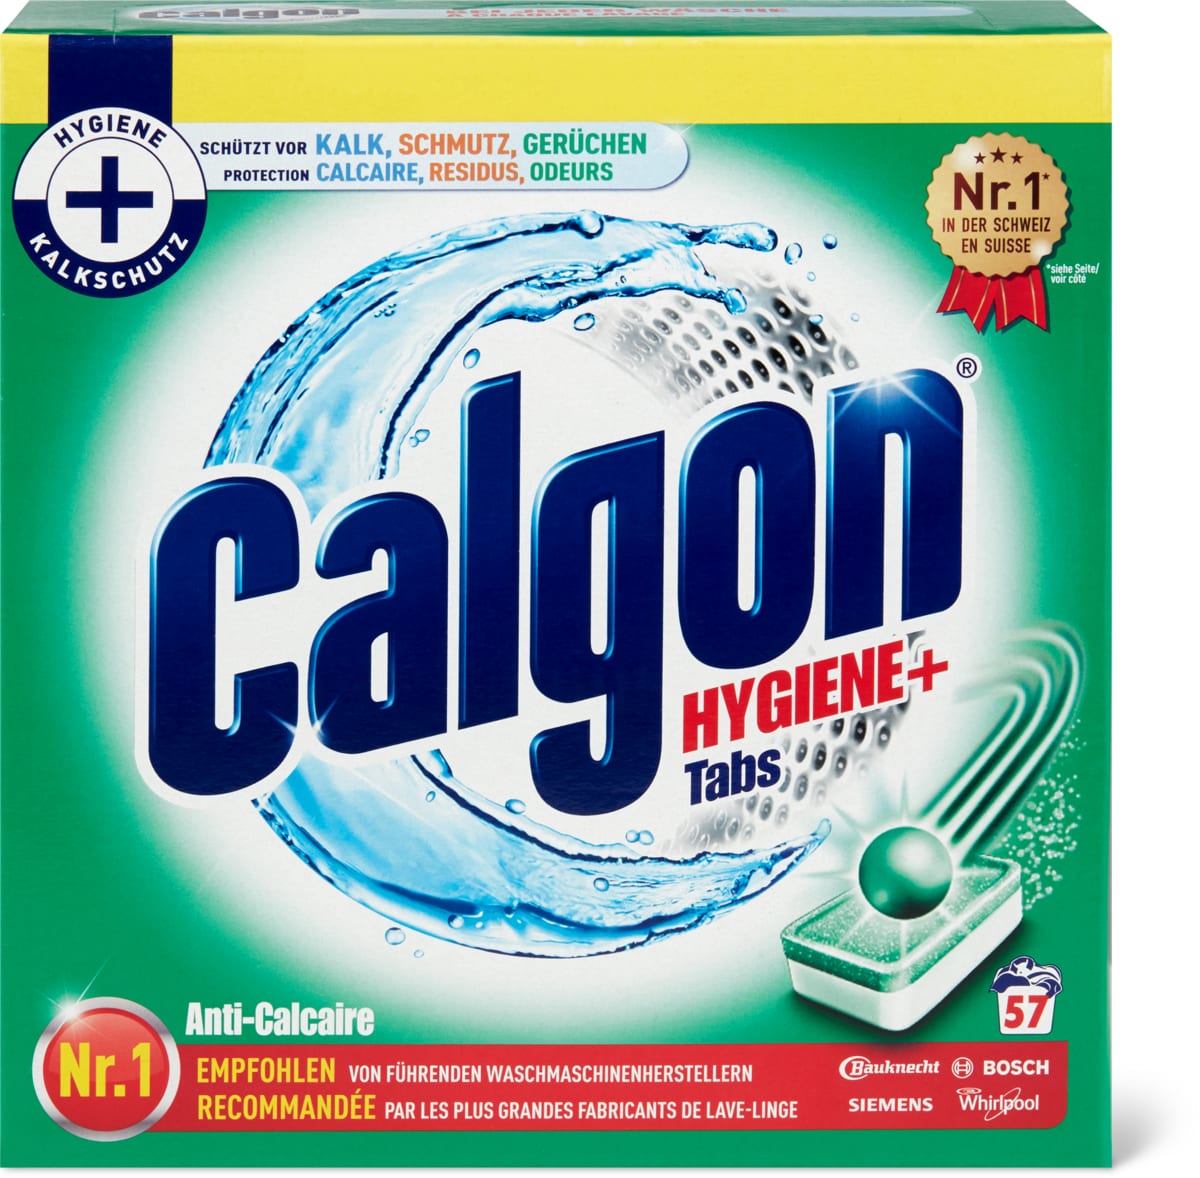 Calgon Hygiene+